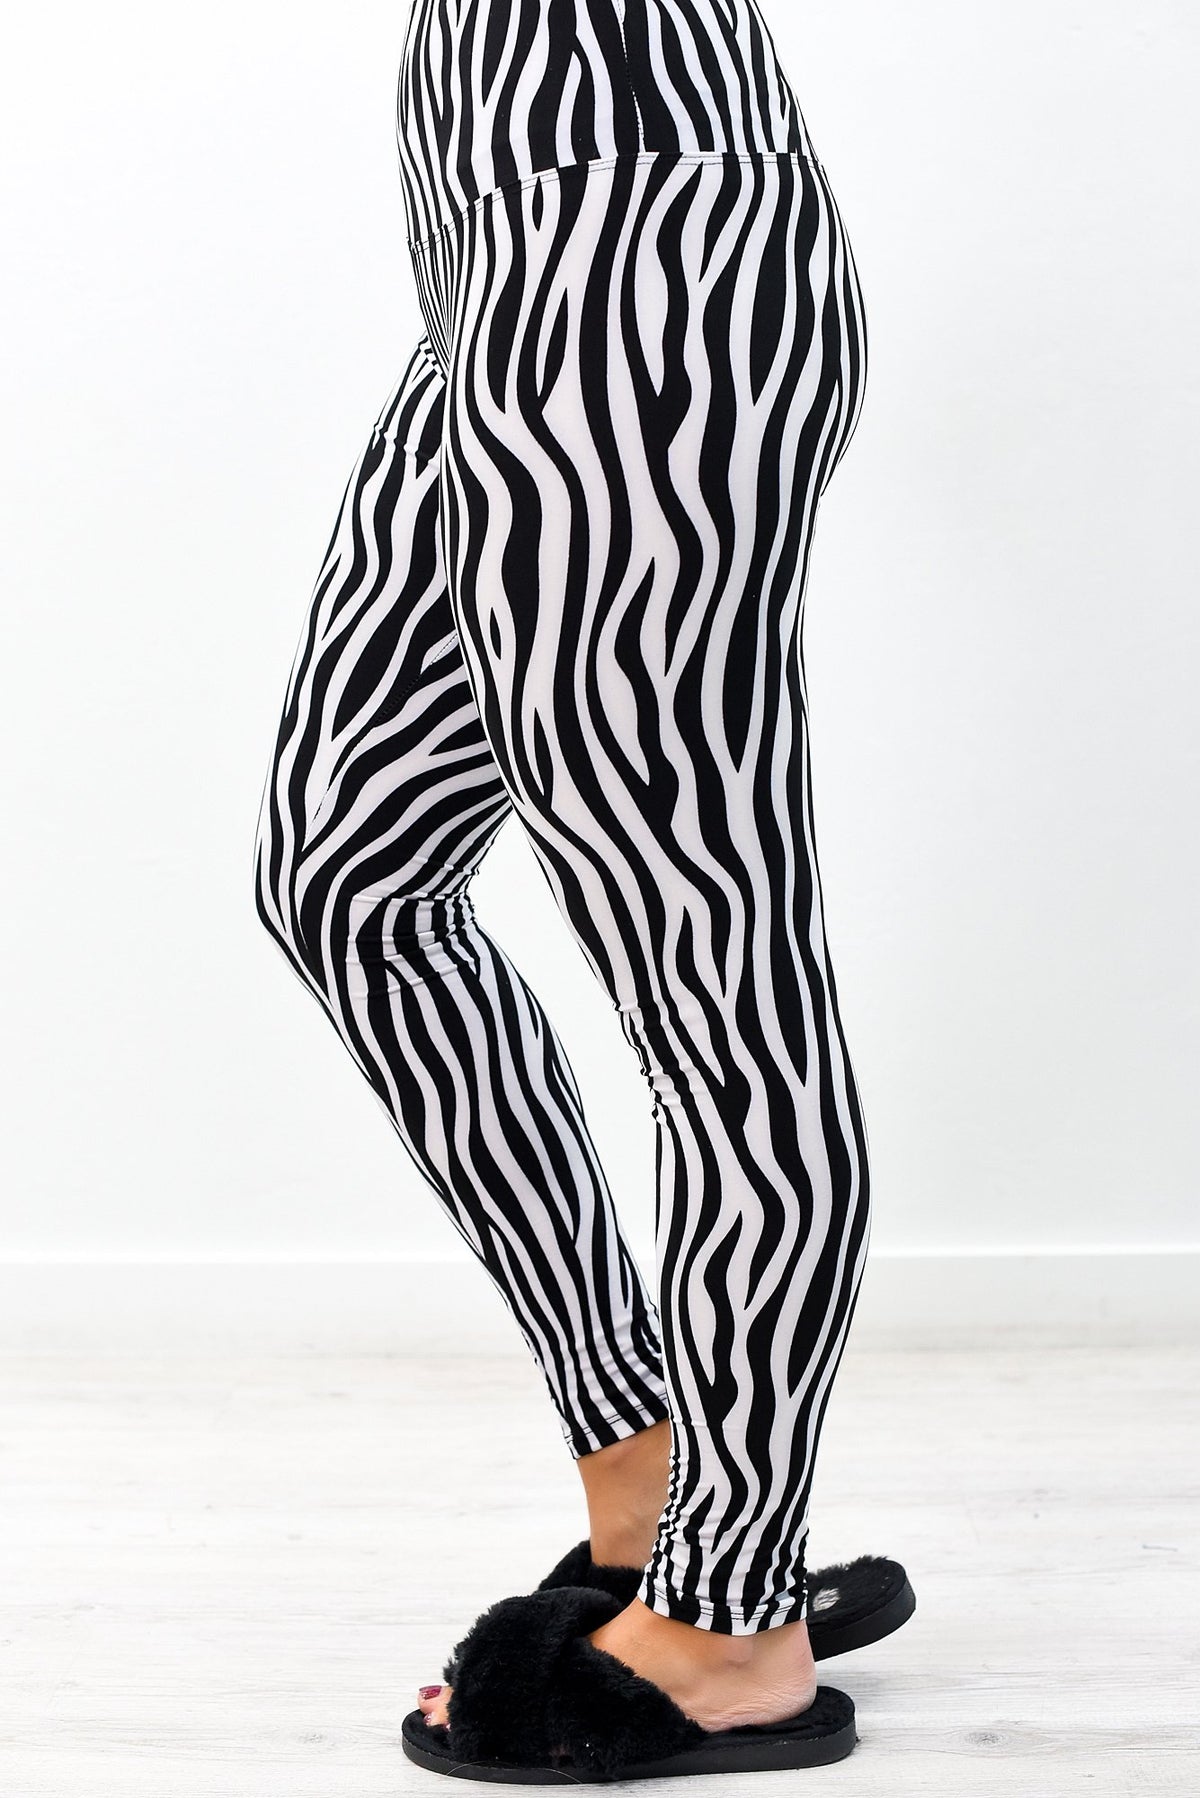 Zebra Wide Band Printed Leggings (Sizes 4-12) - LEG2753ZE